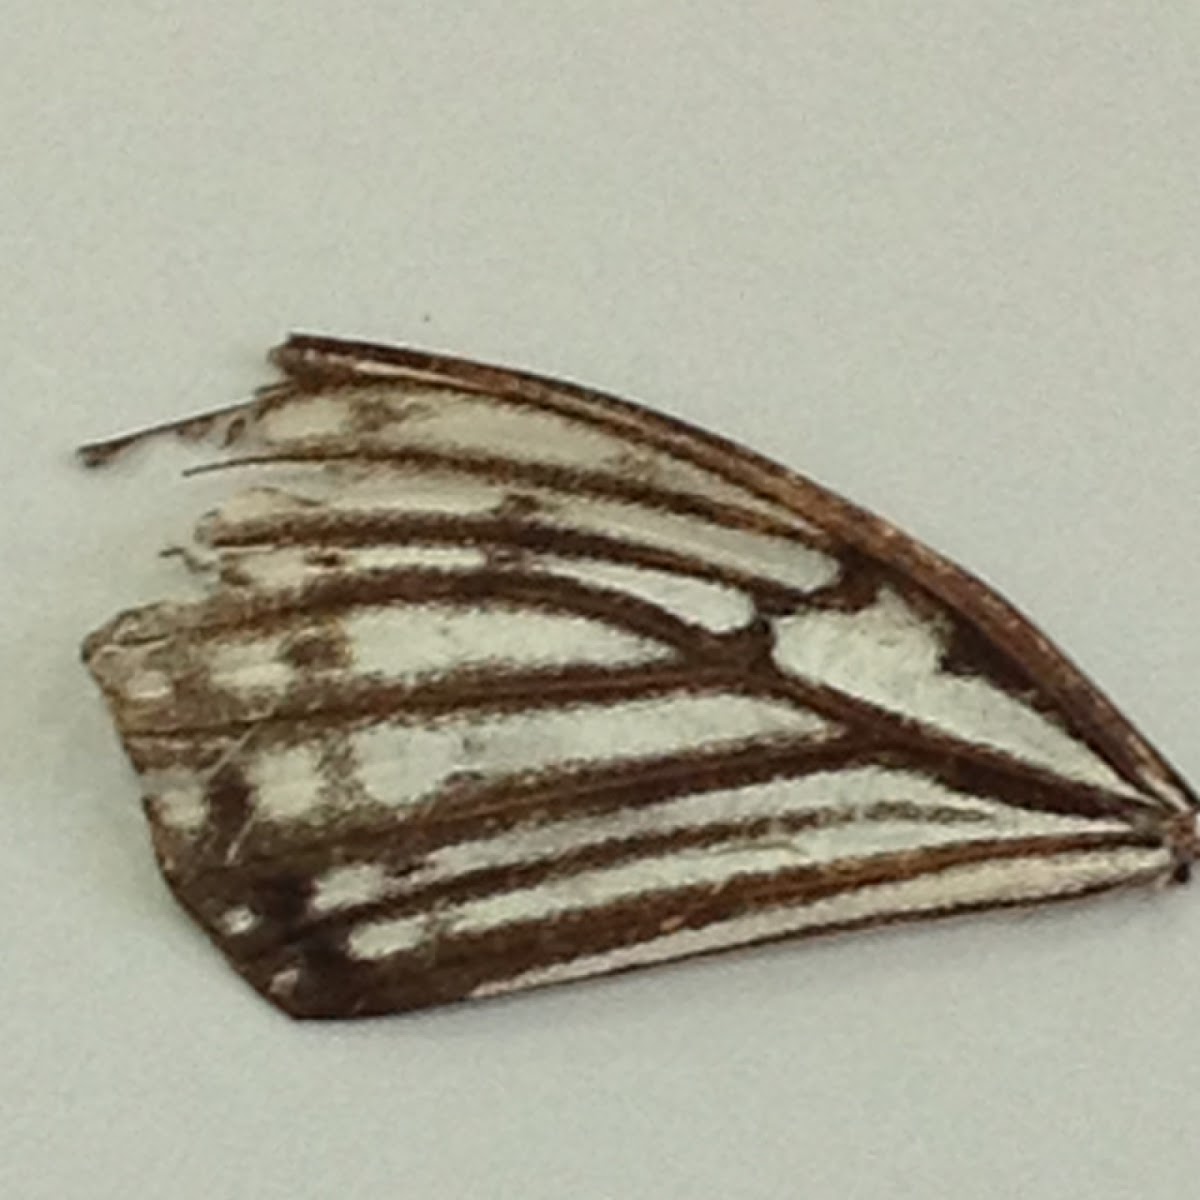 Butterfly's wing